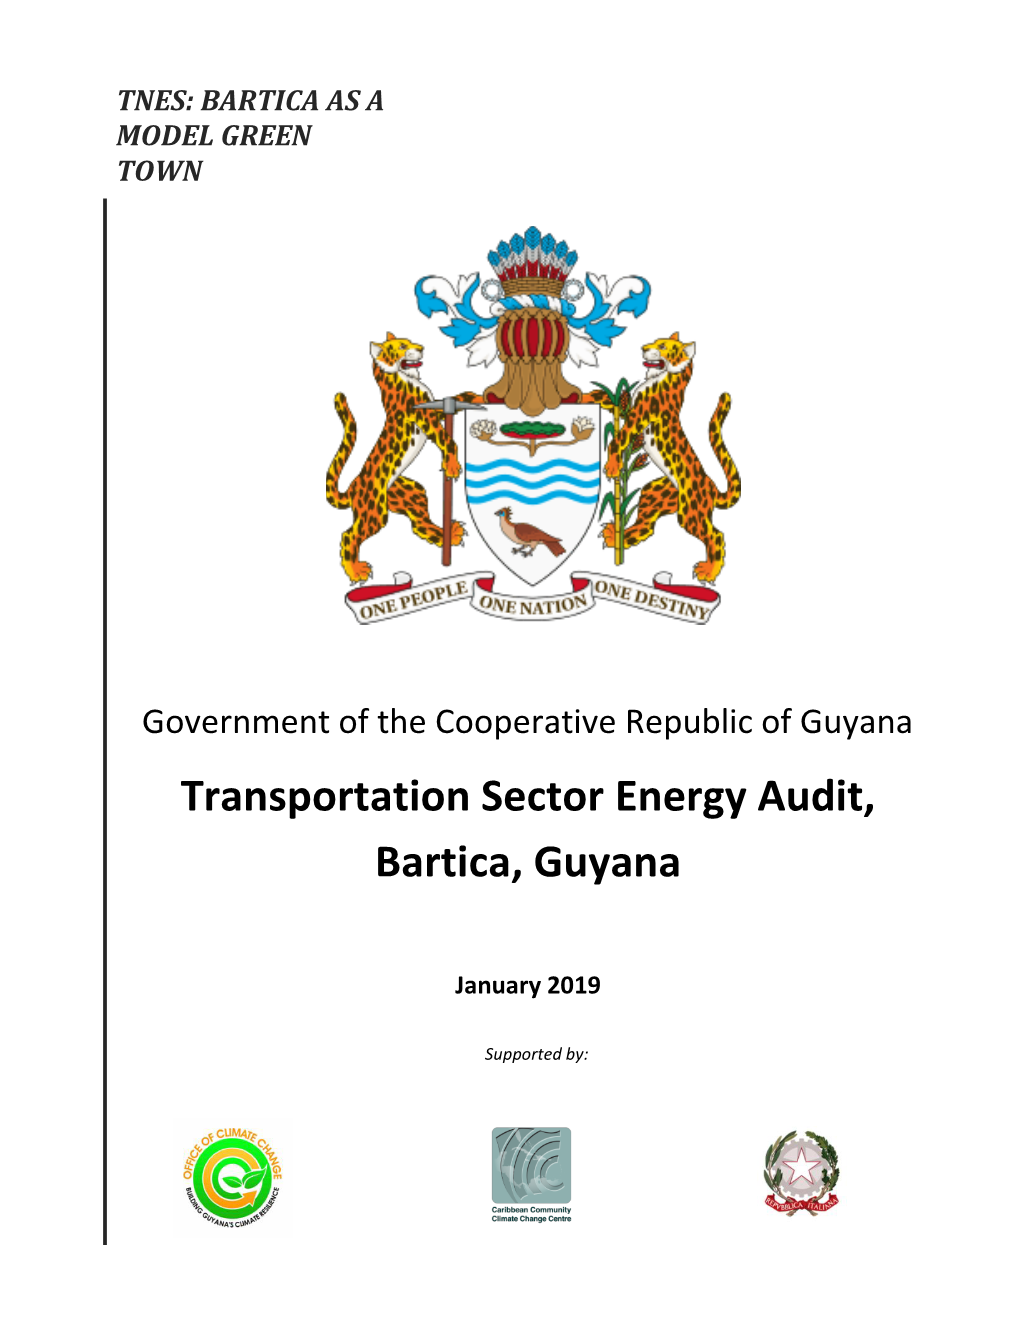 Transportation Sector Energy Audit, Bartica, Guyana